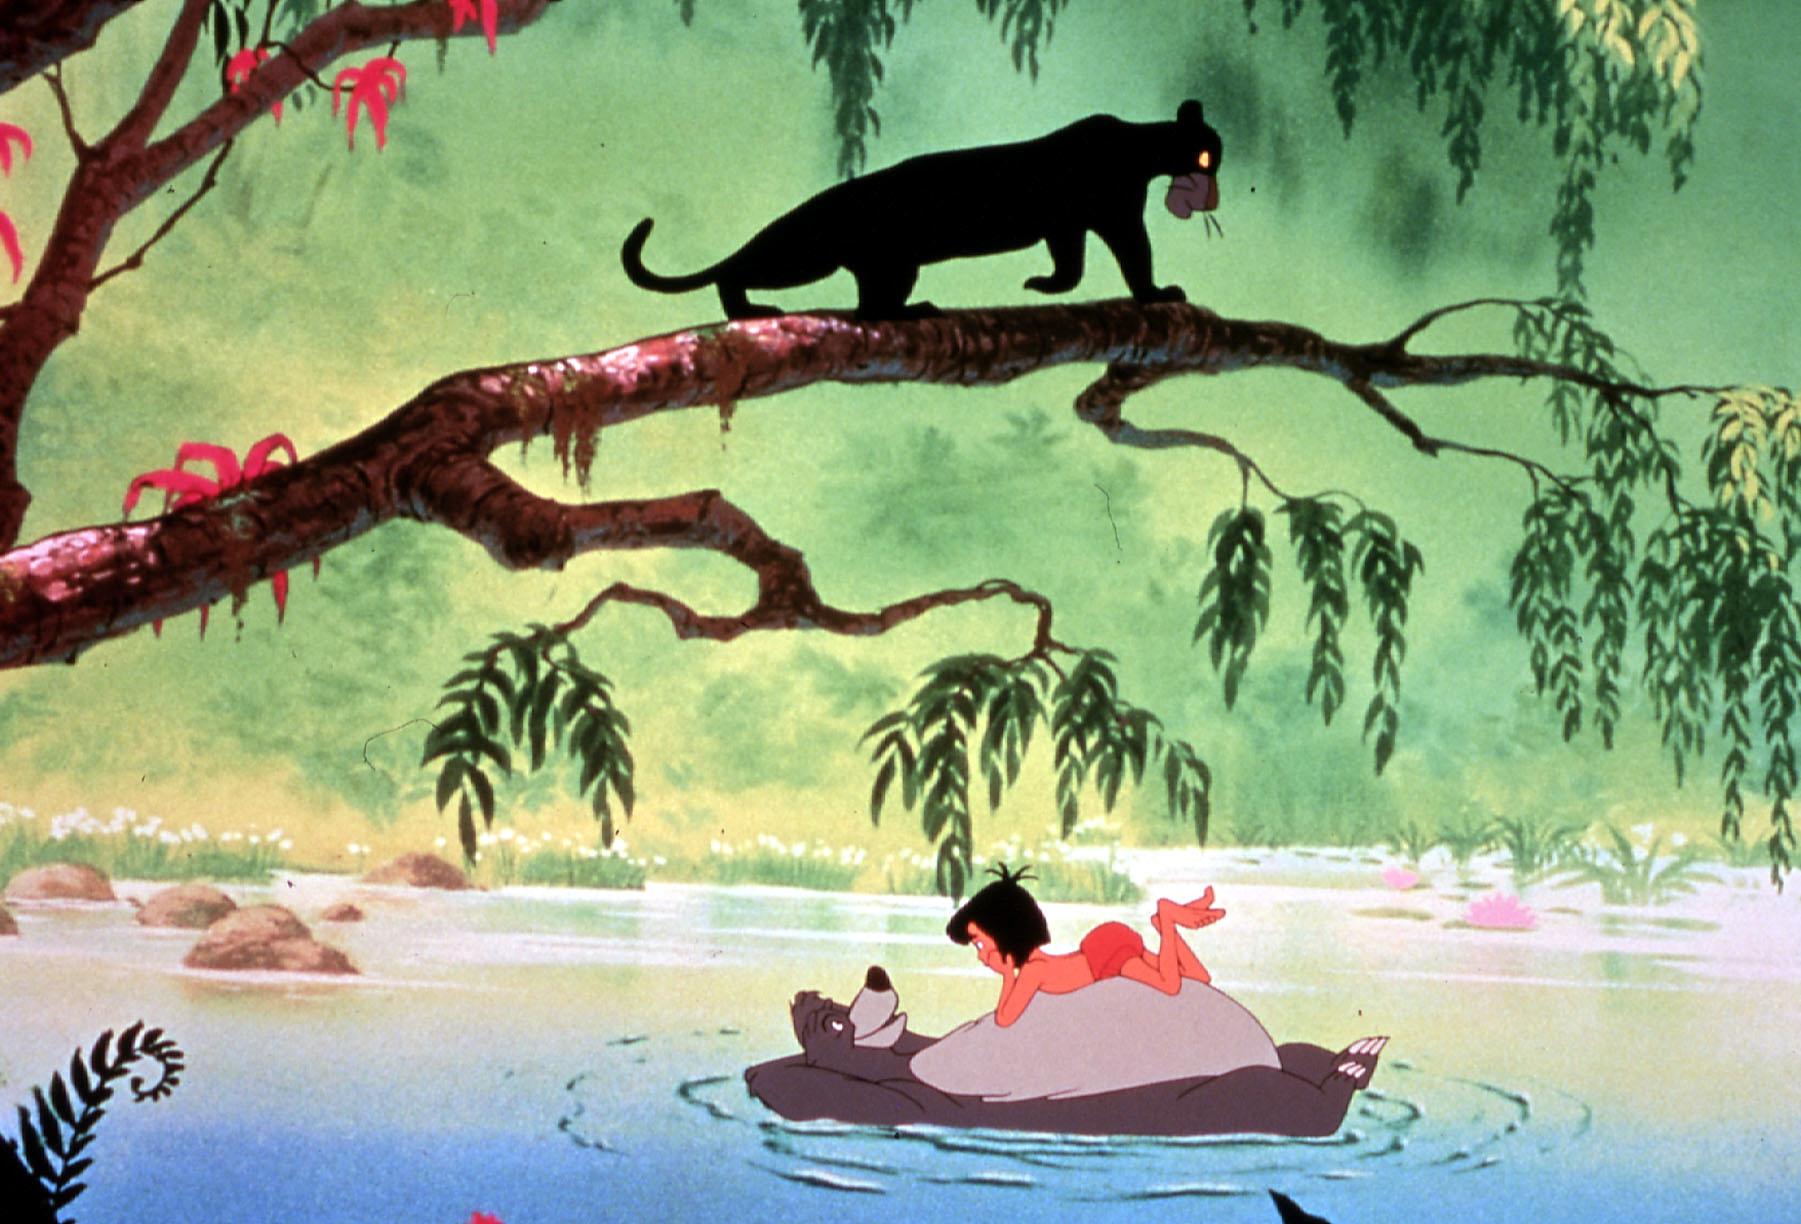 Niet essentieel Destructief tabak Who Are the Voices Behind Disney's Animated Film 'The Jungle Book'?